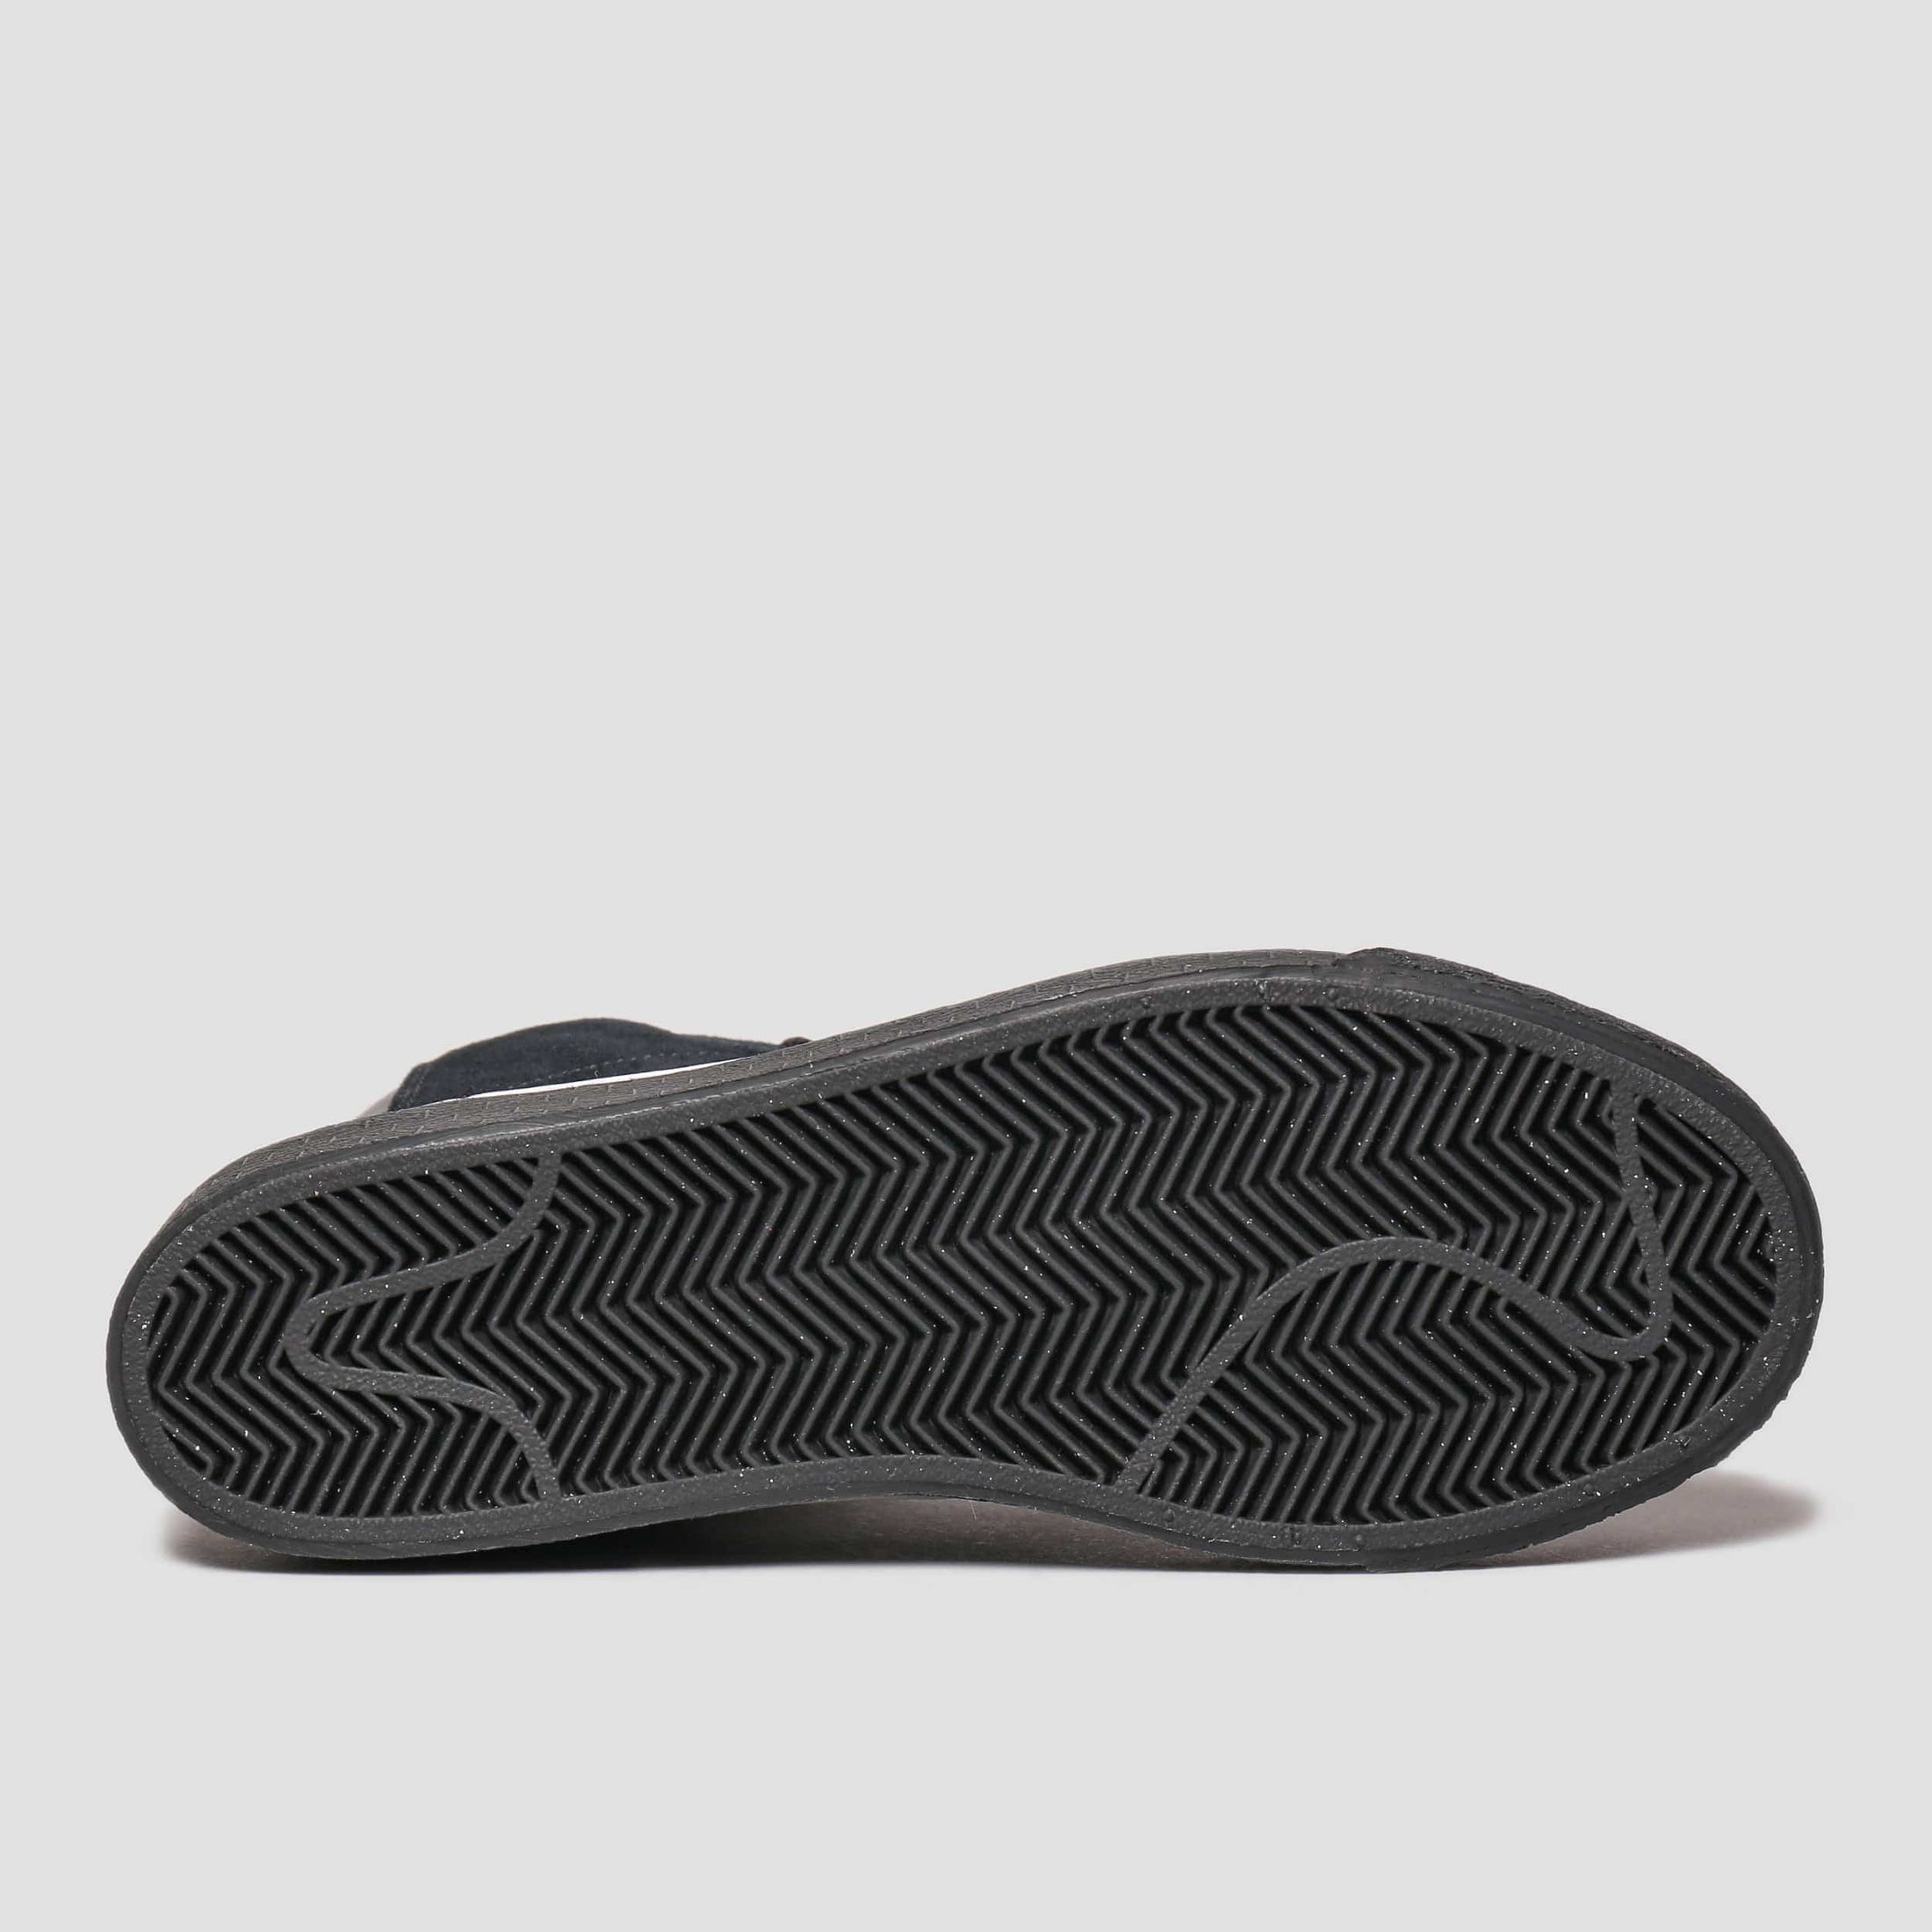 Nike SB Blazer Mid Shoes Black / White - Black - Black